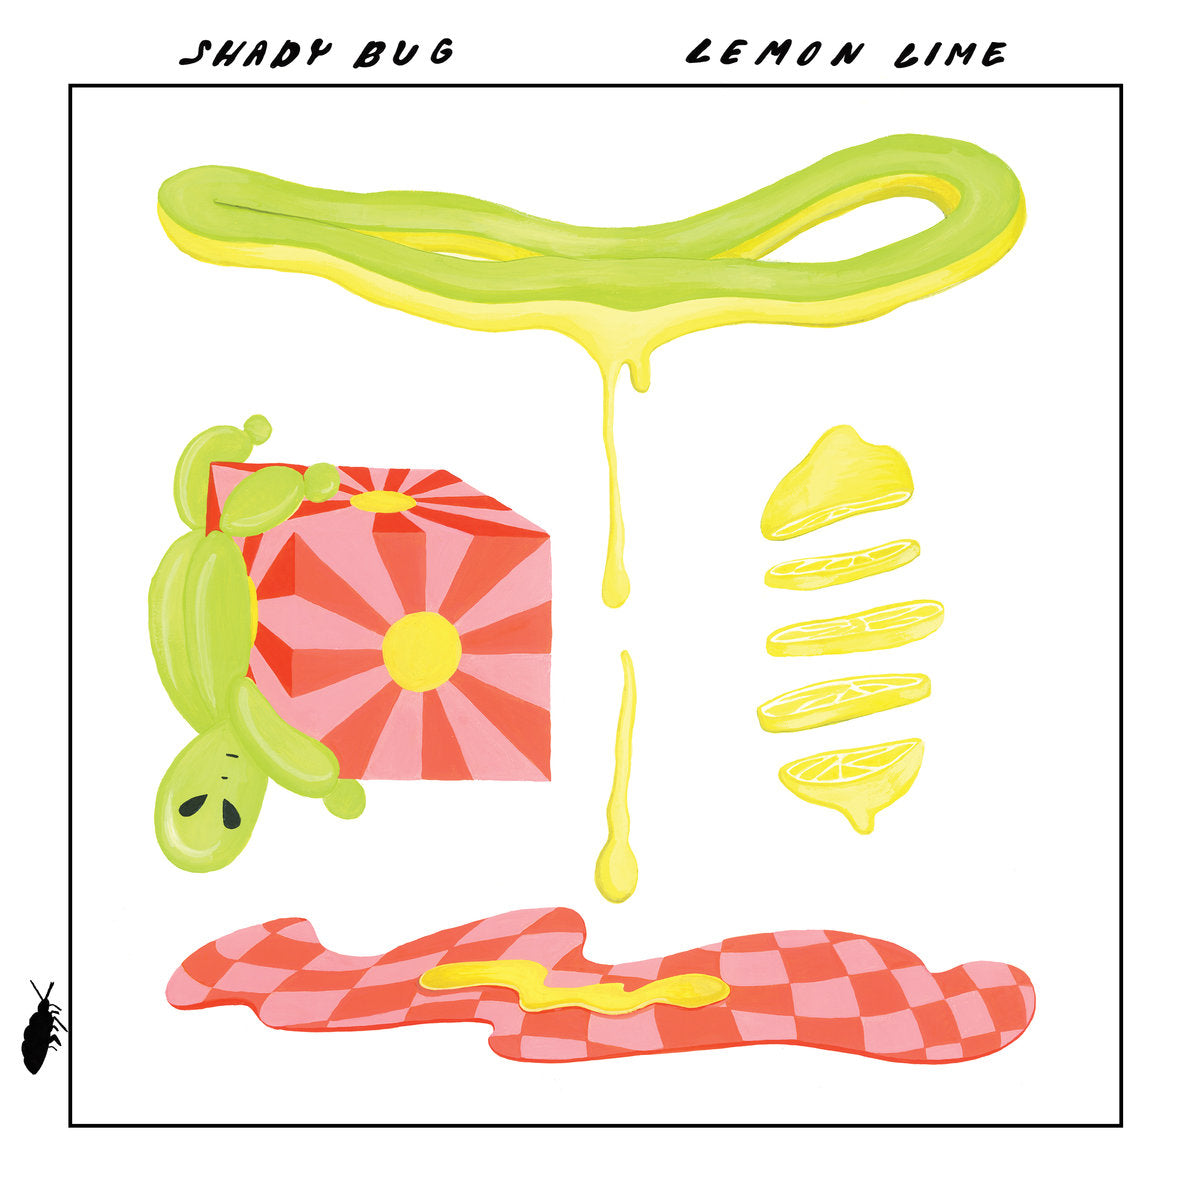 Shady Bug - Lemon Lime LP